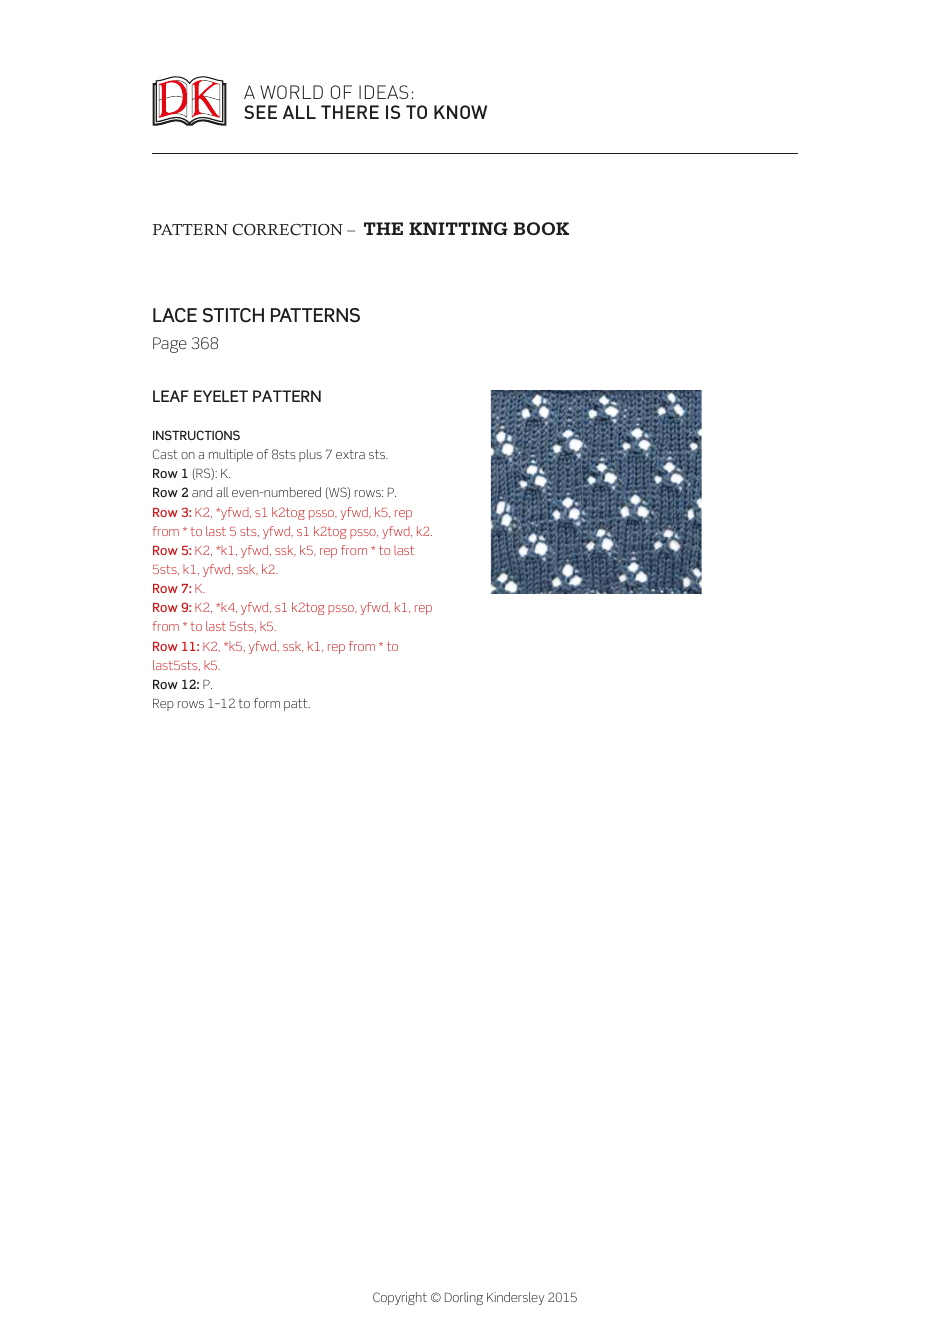 Lace Stitch Knitting Pattern Collection - Dorling Kindersley